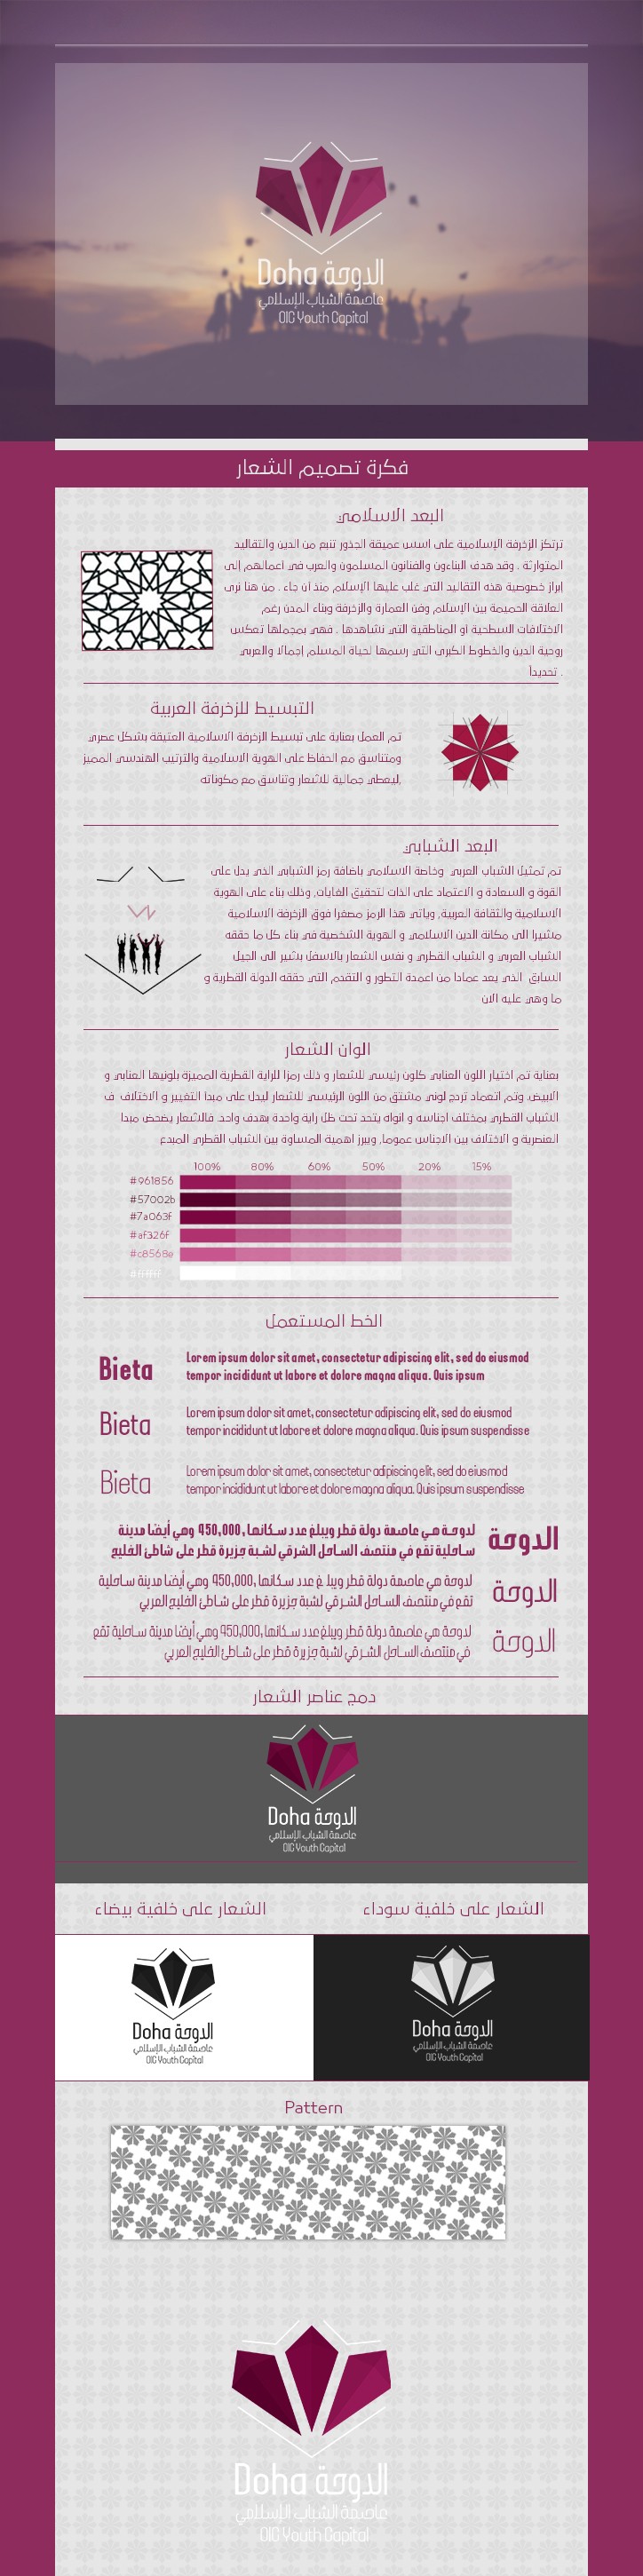 Doha-logo2-presentation